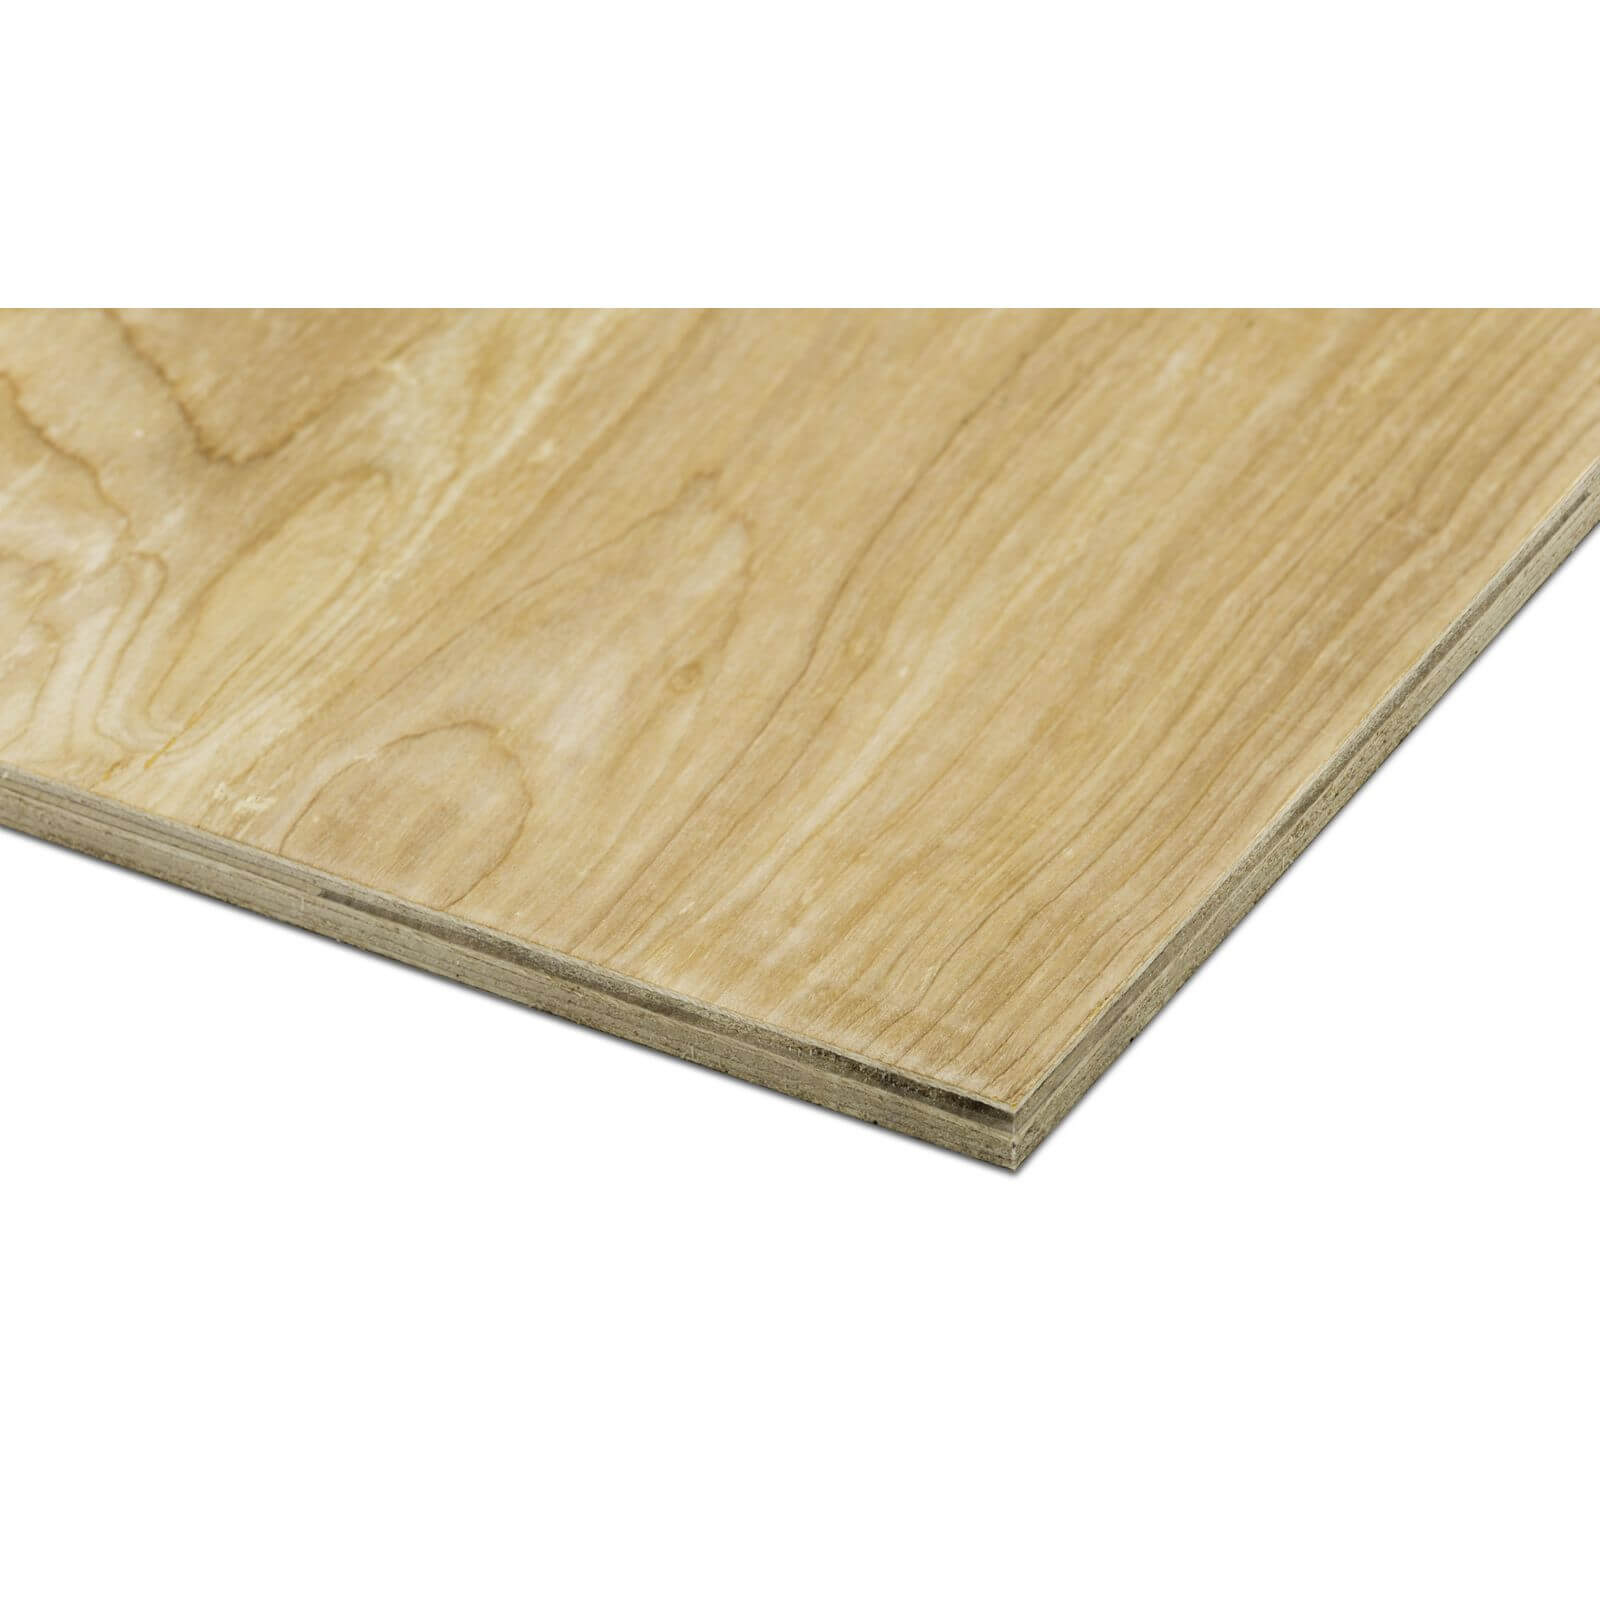 Metsa Hardwood Plywood Board 1.2m (2440 x 1220 x 12mm)